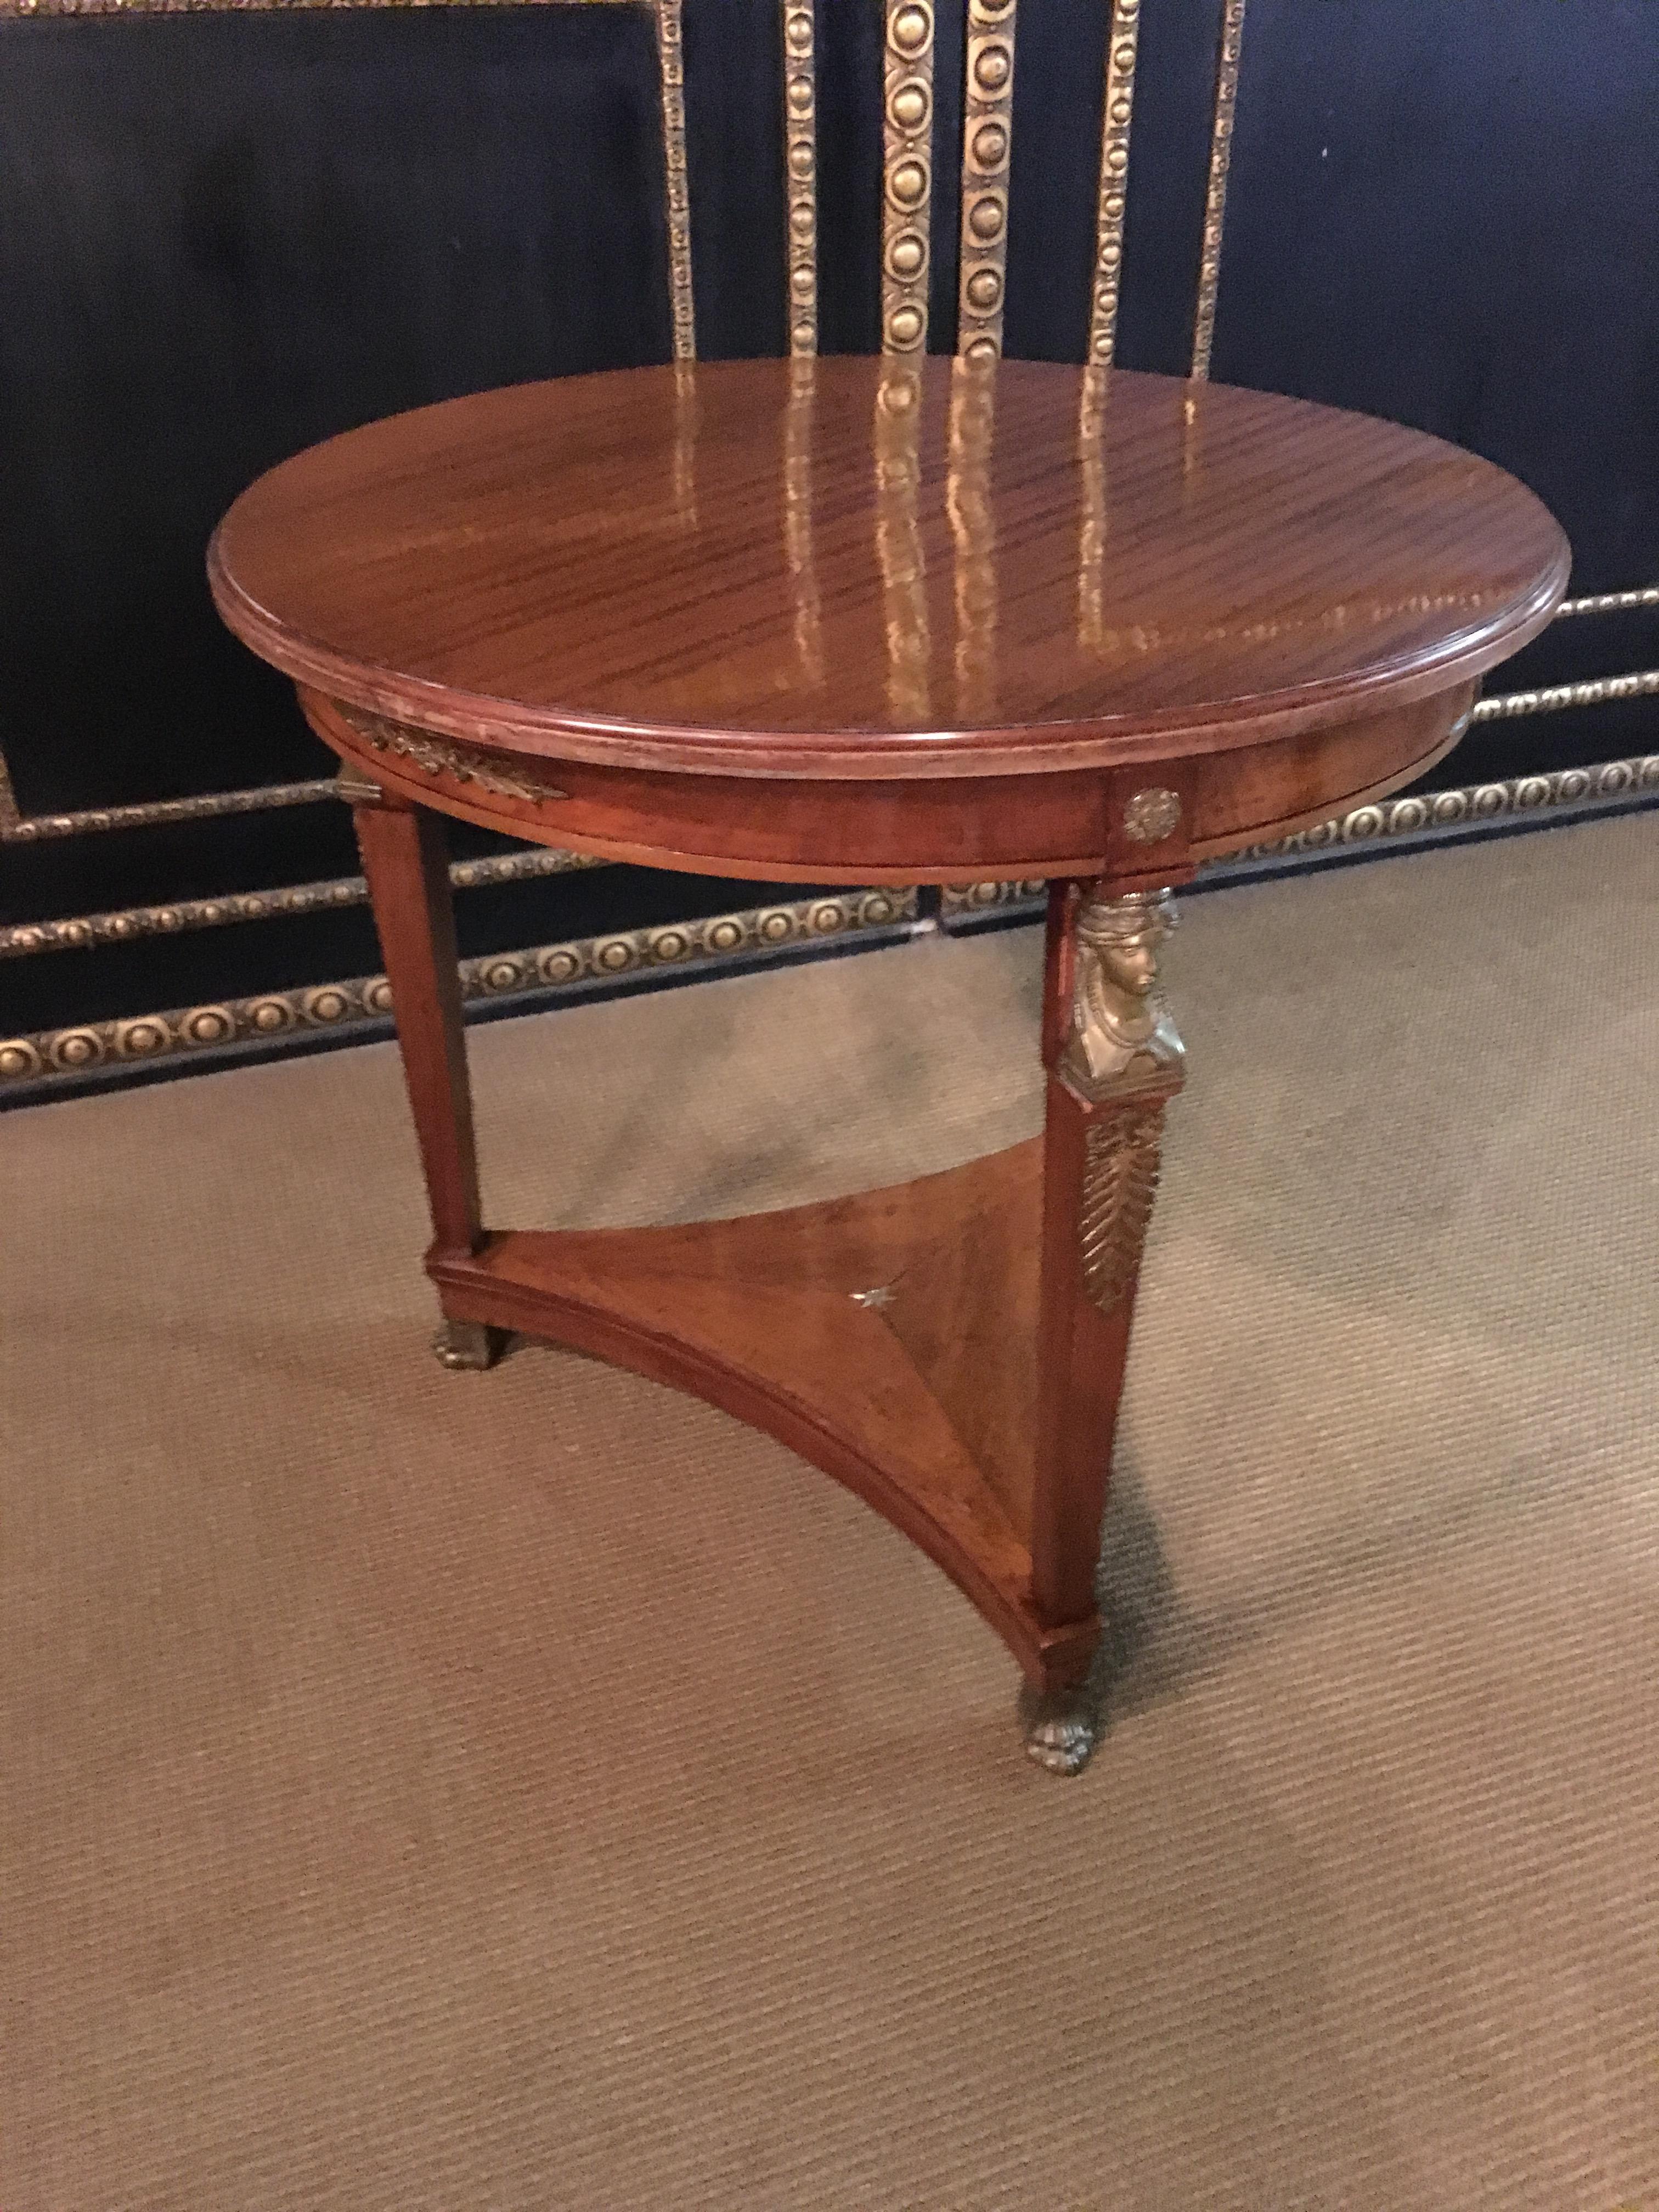 Original Empire Table circa 1860-1880 Mahogany (Französisch)